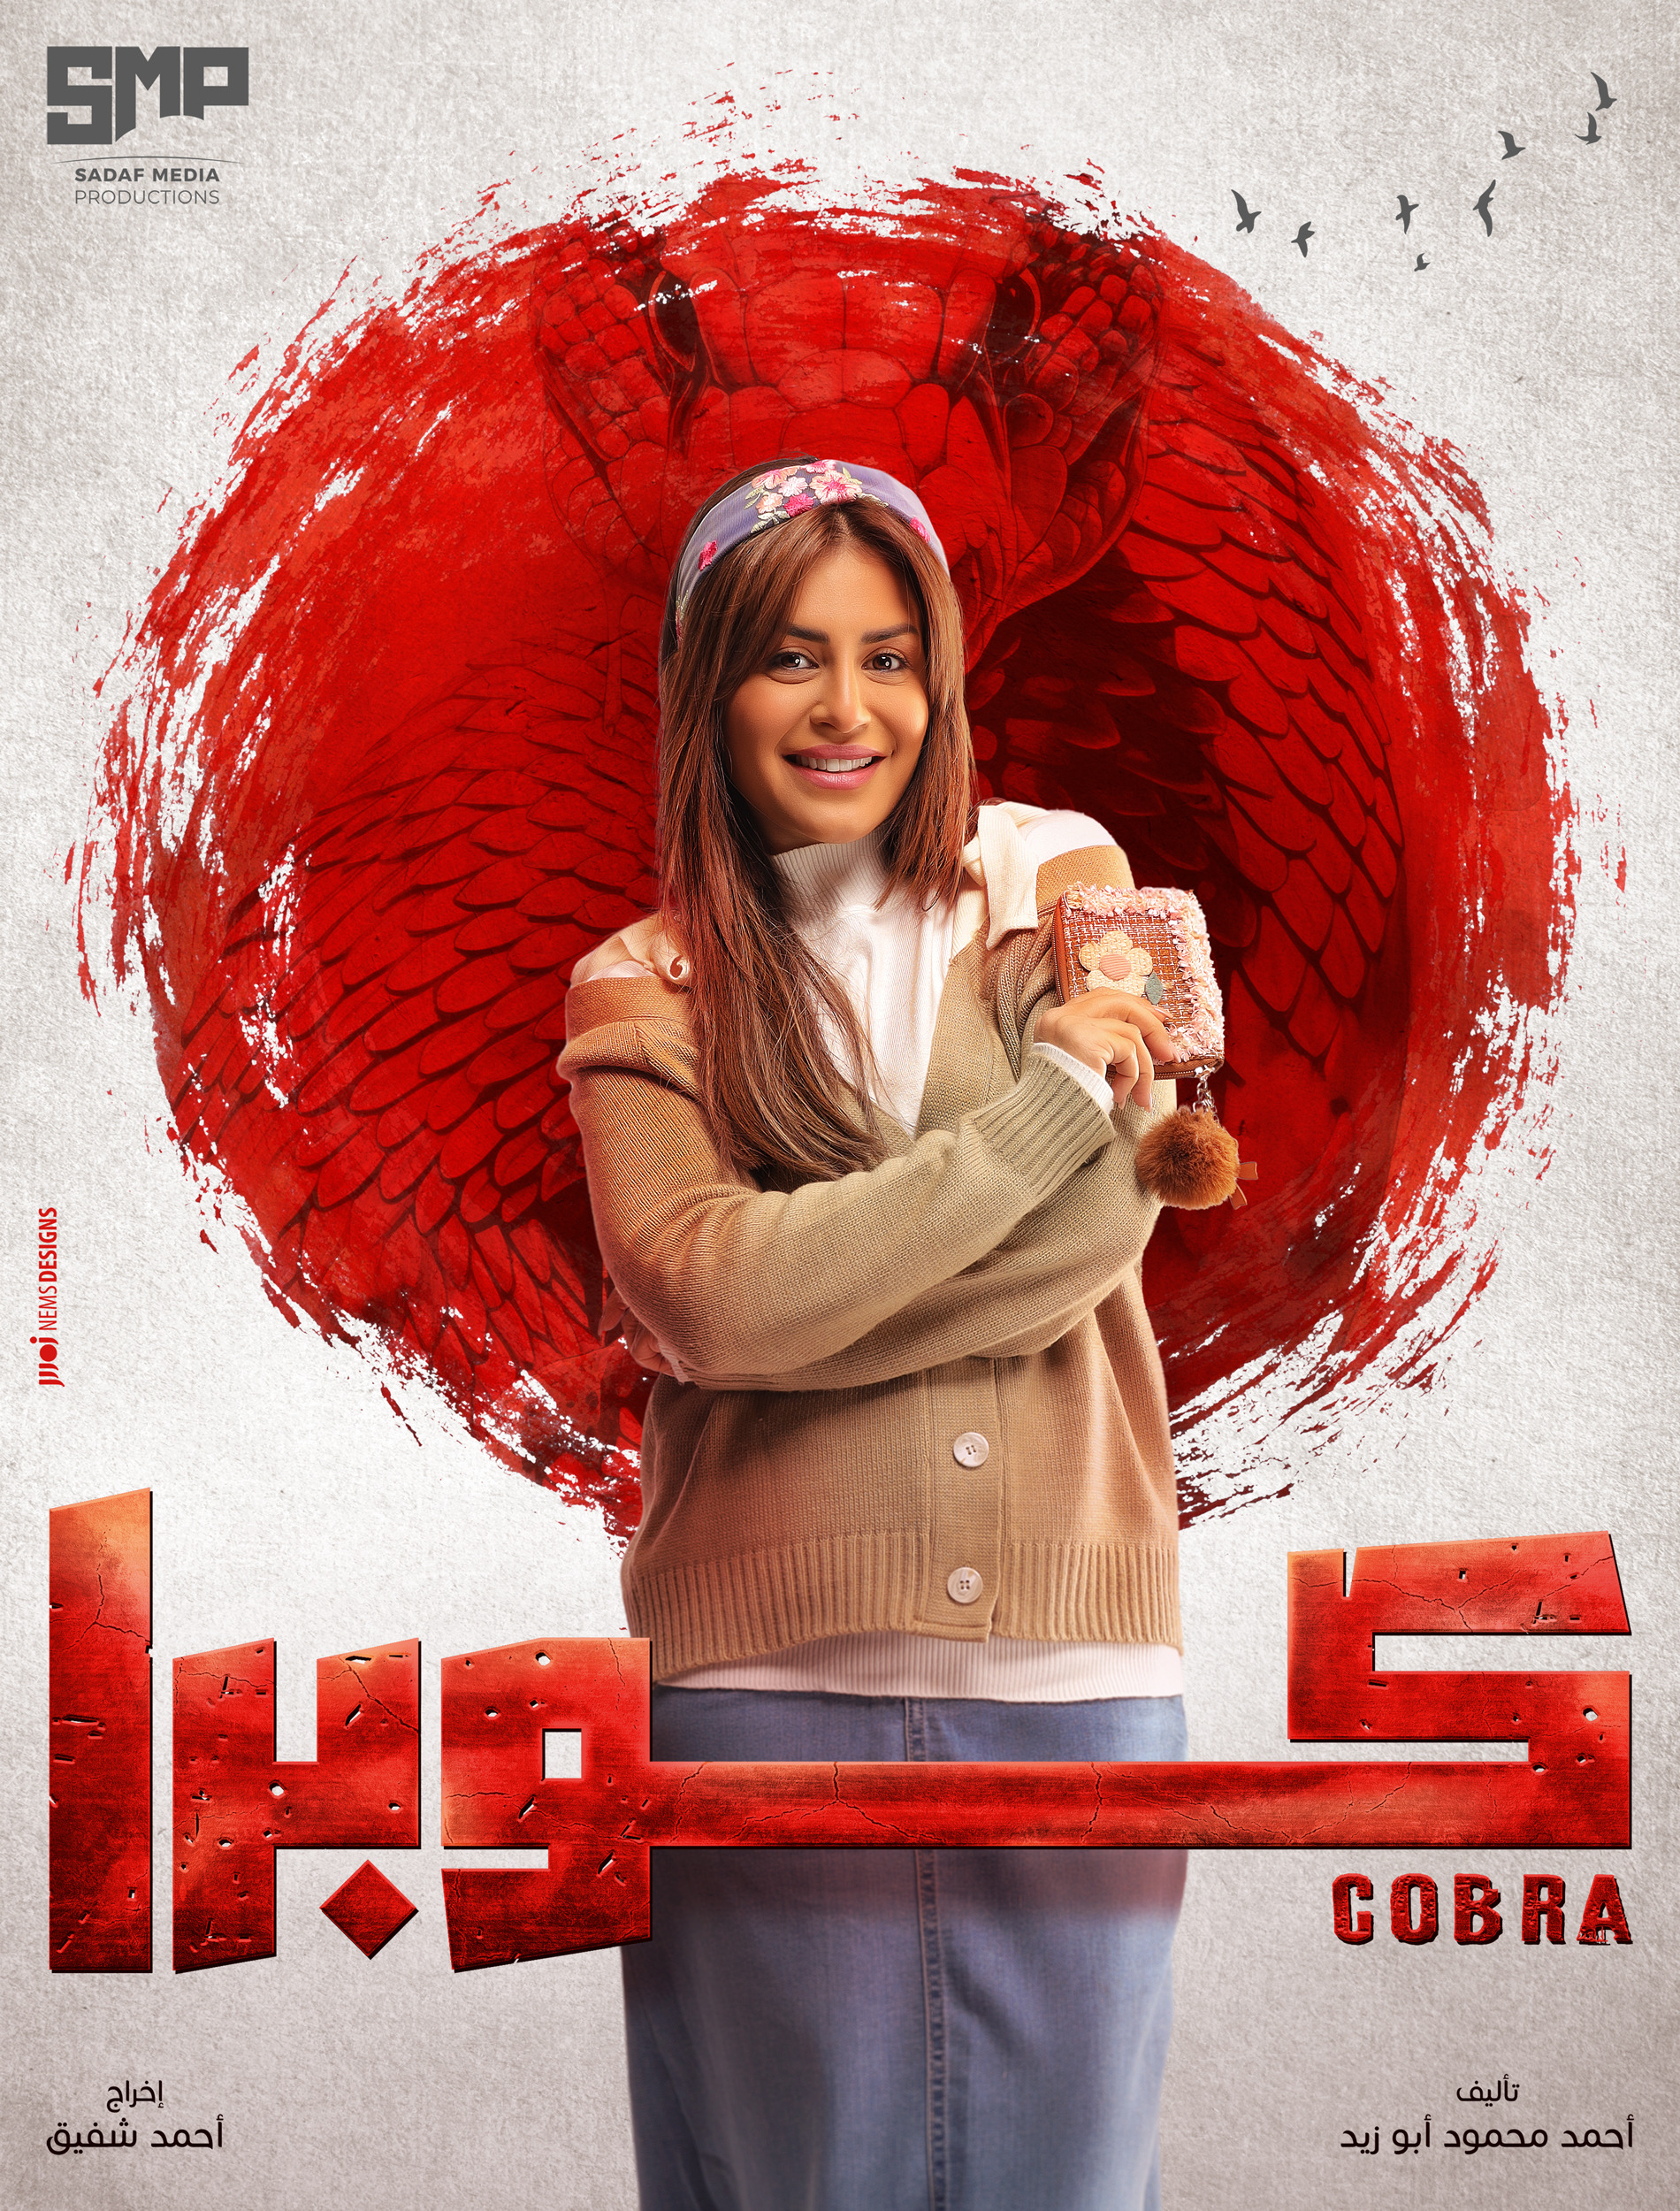 Mega Sized TV Poster Image for Cobra (#14 of 20)